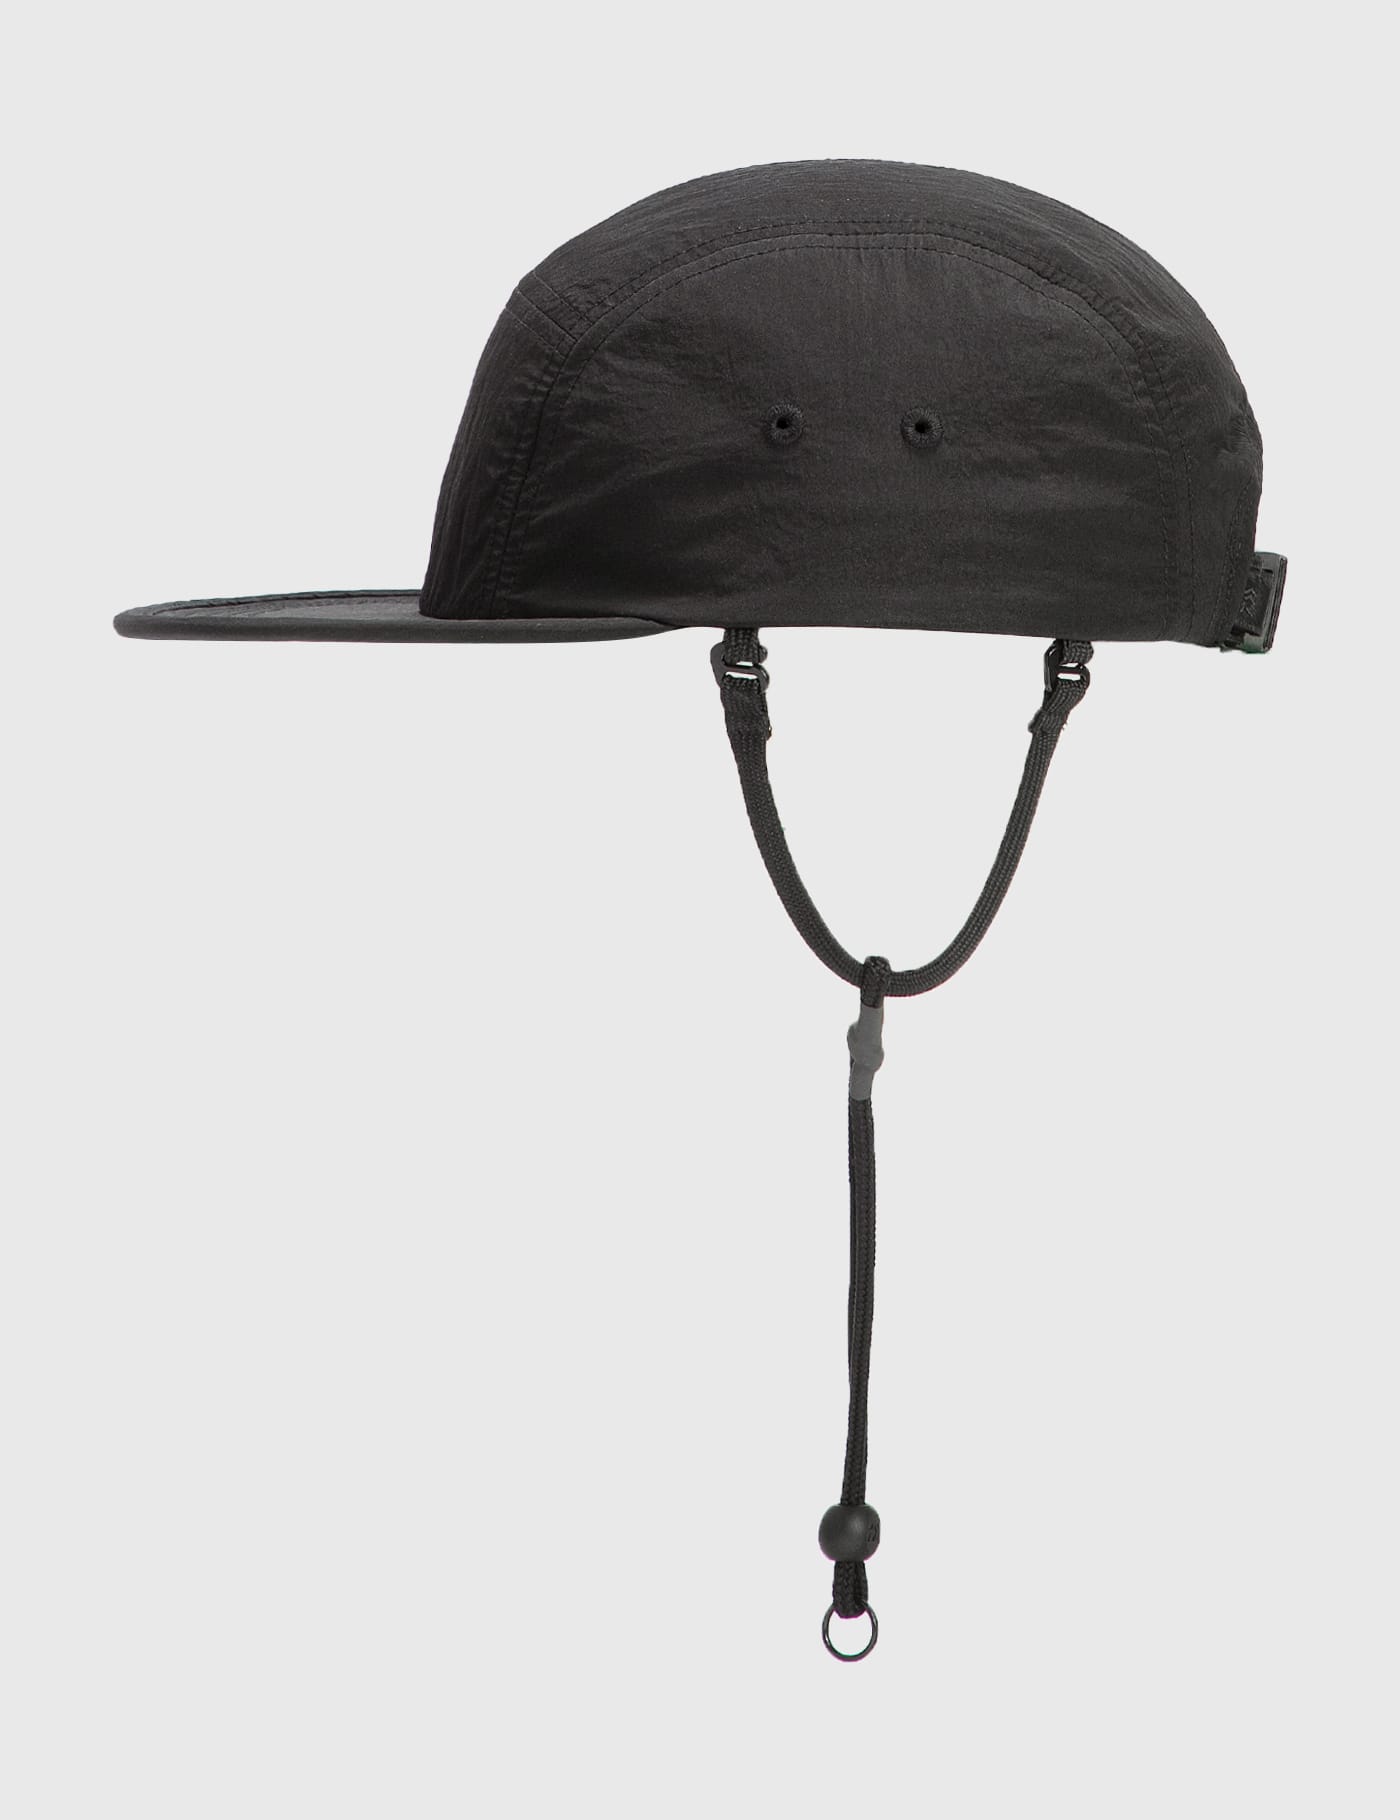 DAIWA PIER39 - Tech Angler's Cap | HBX - Globally Curated Fashion 